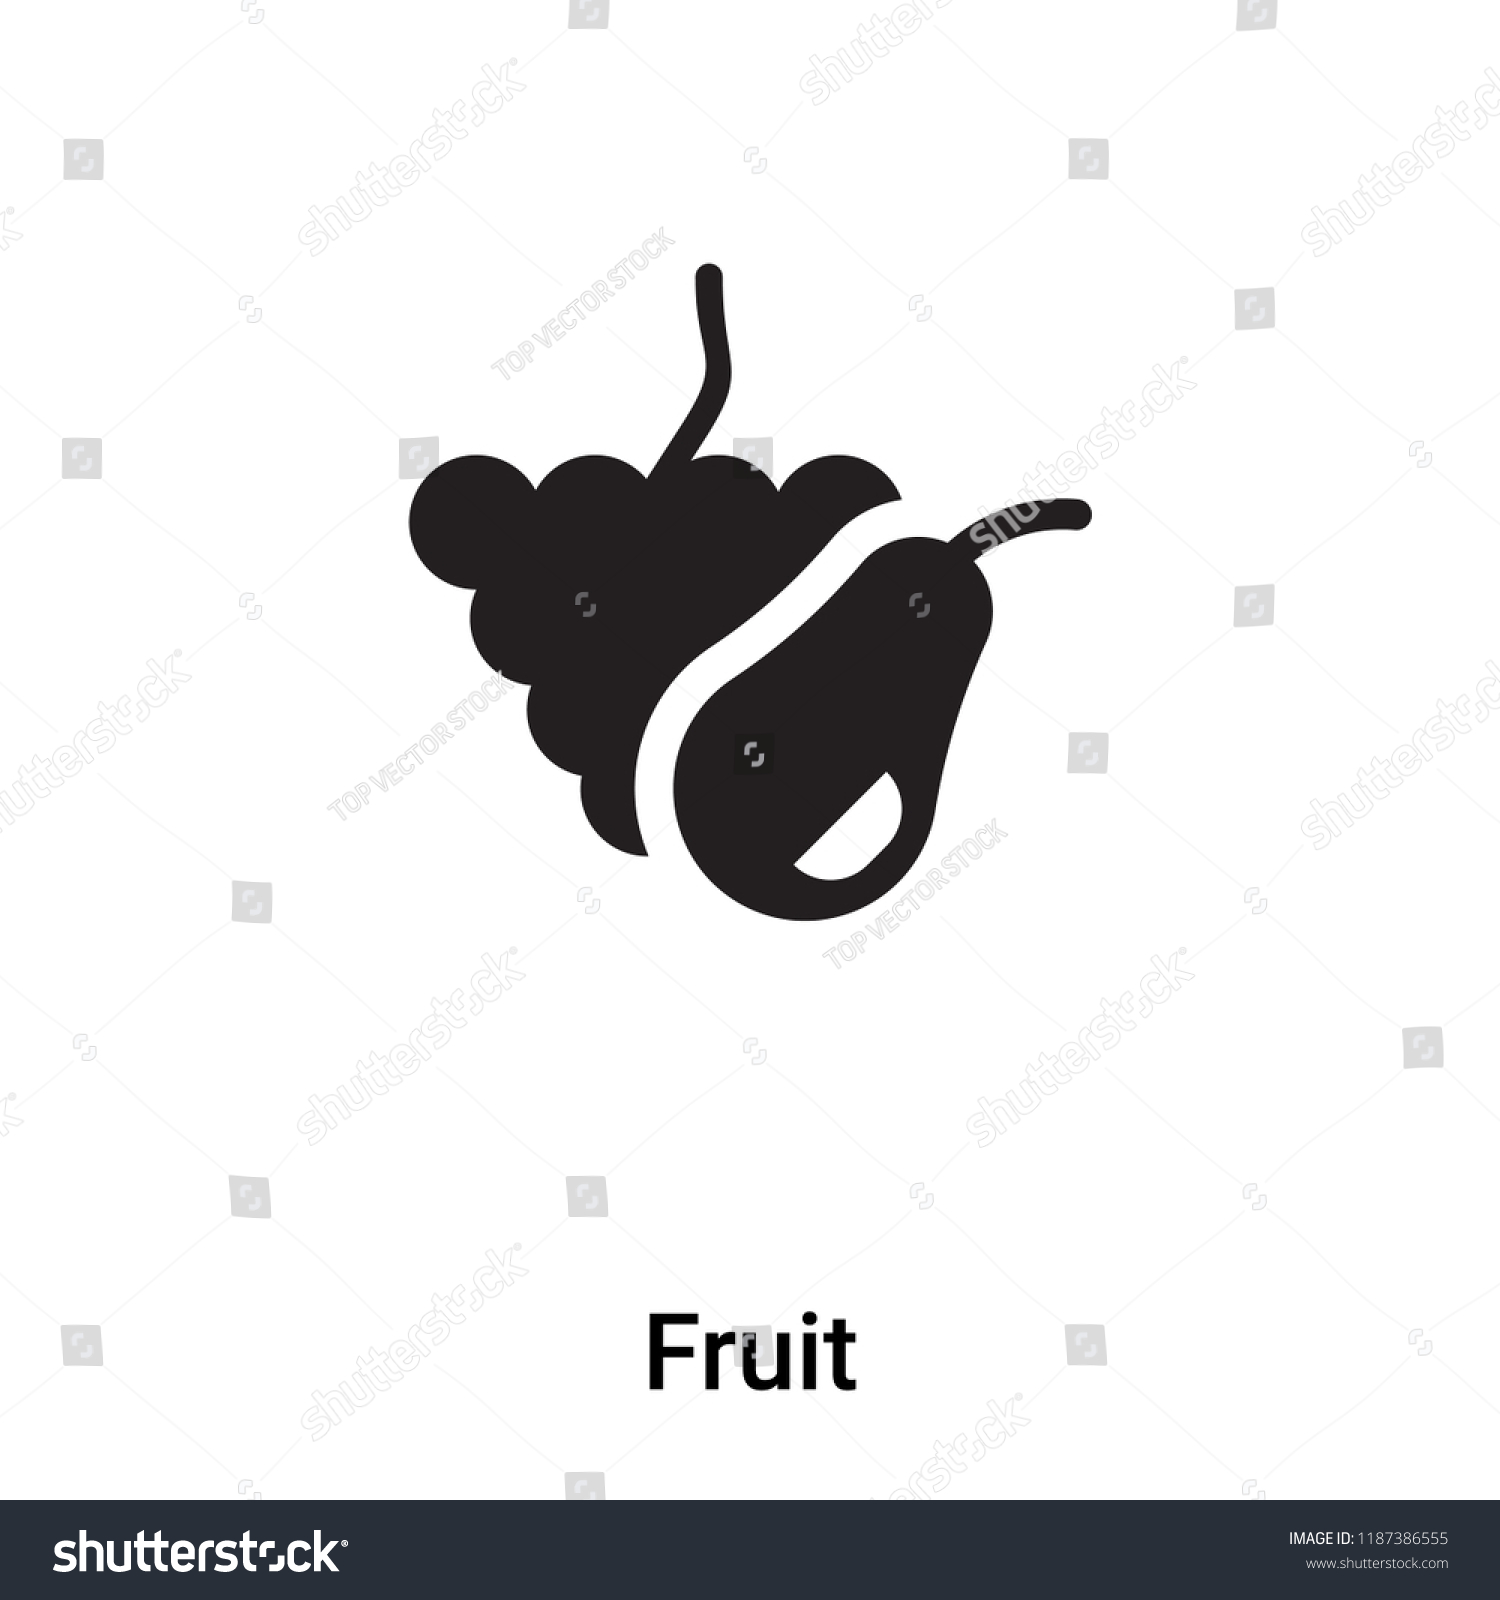 SVG of Fruit icon vector isolated on white background, logo concept of Fruit sign on transparent background, filled black symbol svg